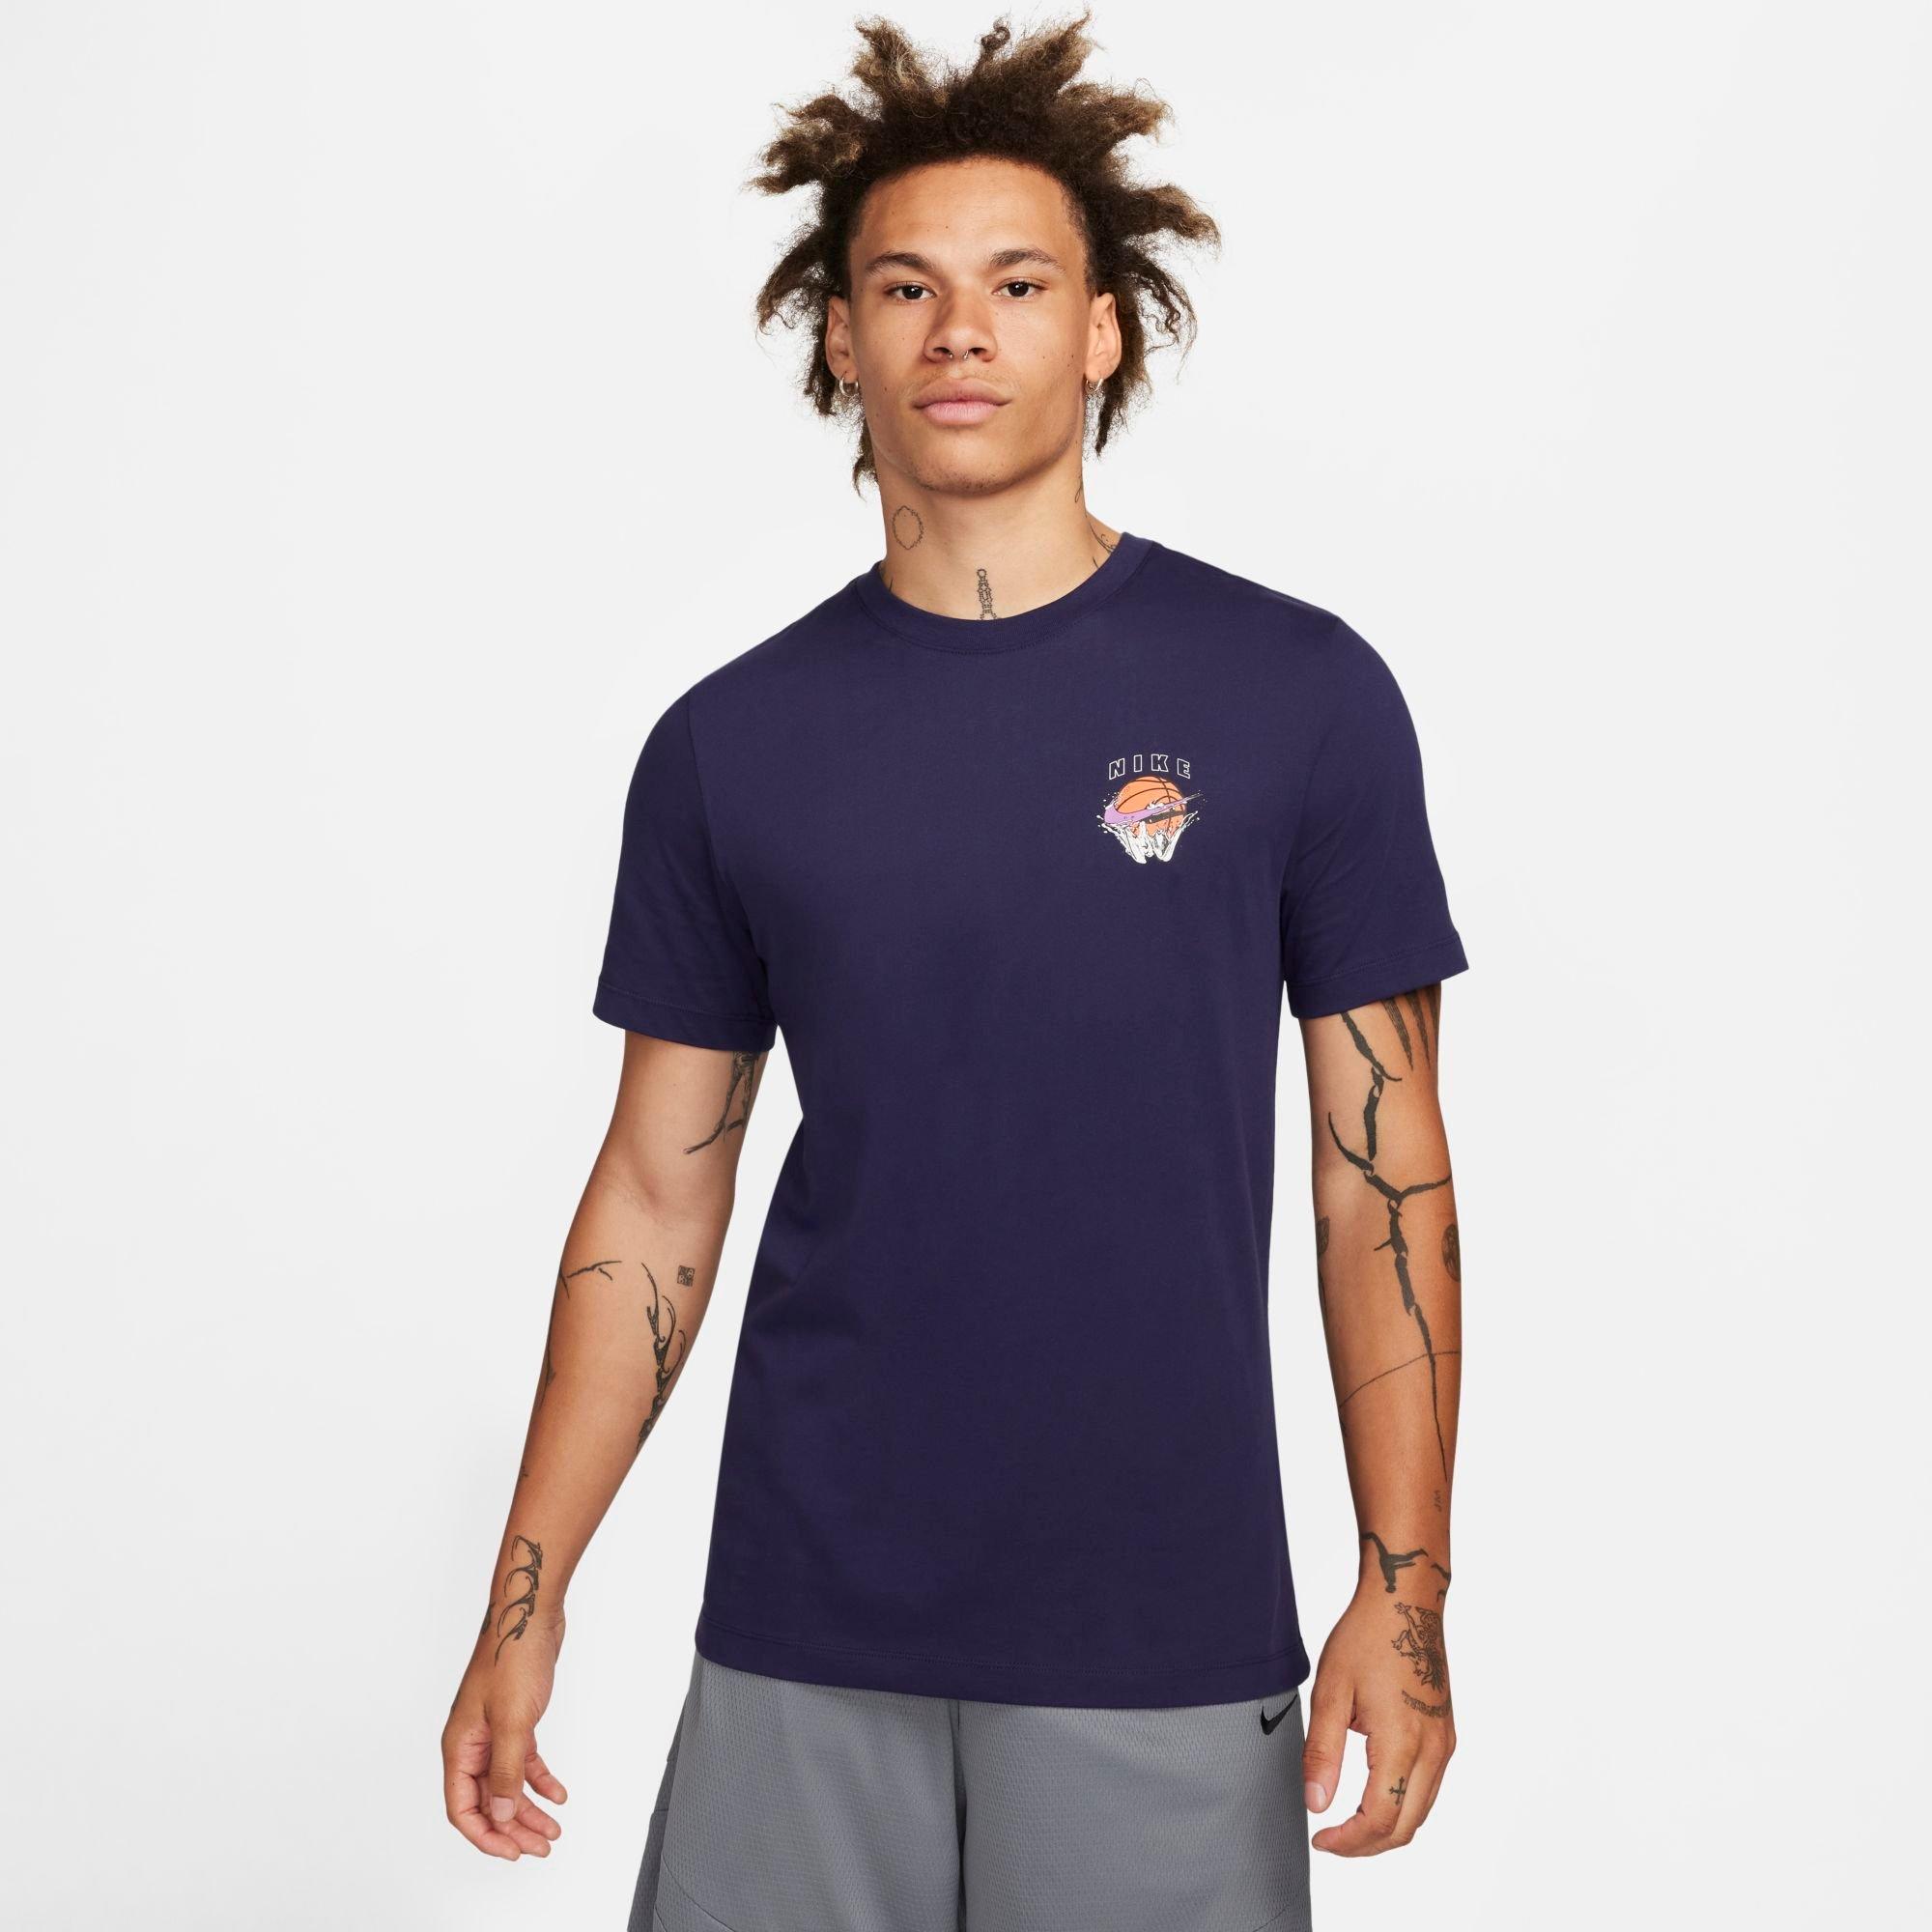 Nike Men's Dri-fit Basketball T-shirt In Purple